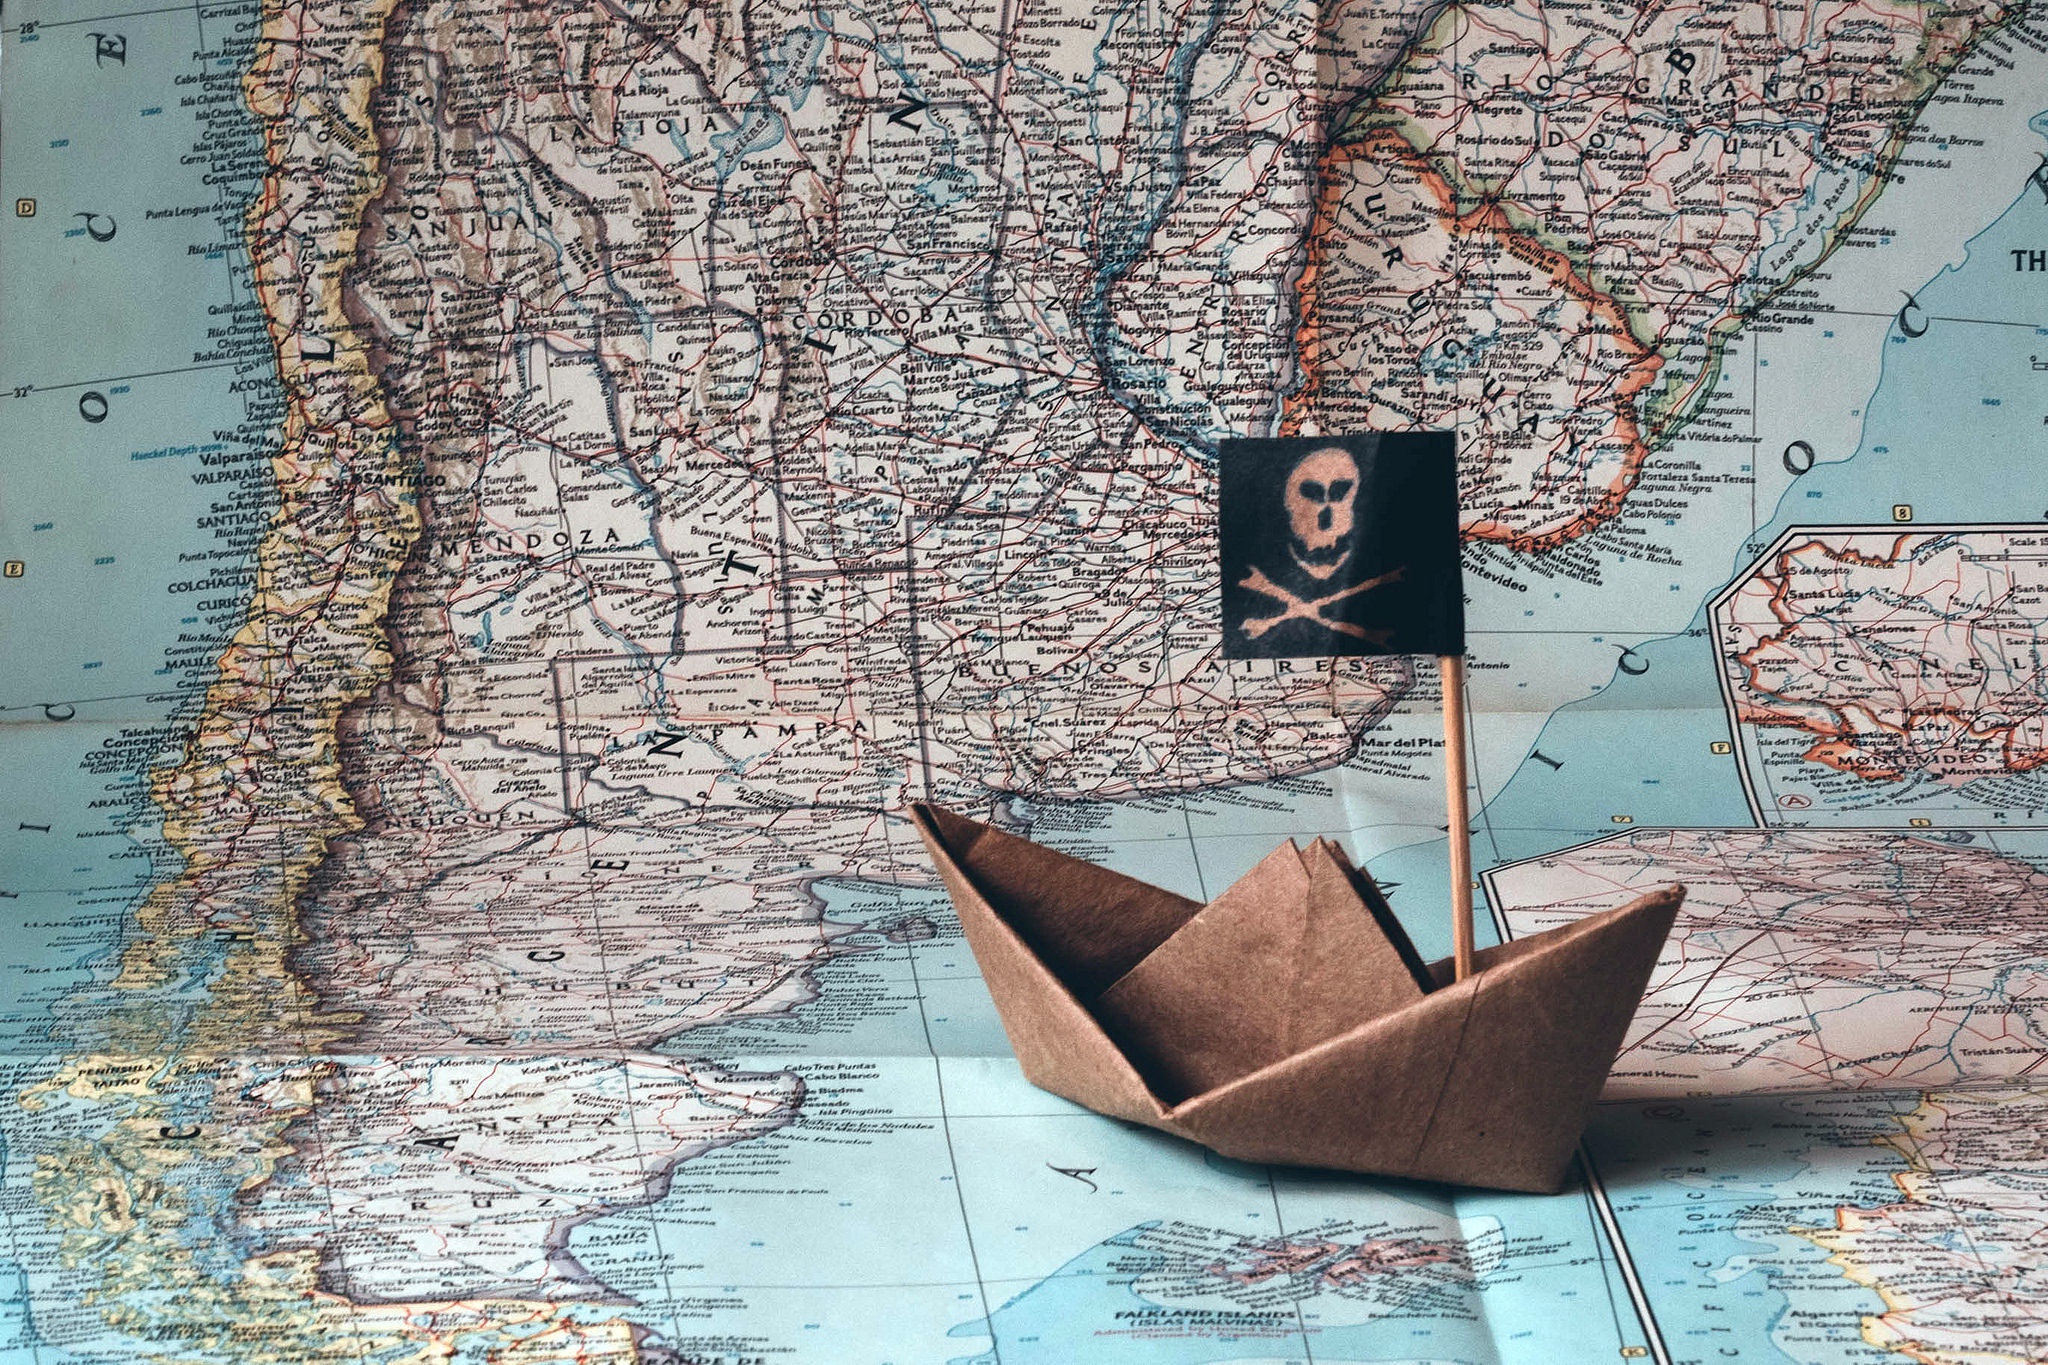 paper, man made, origami, map, paper boat, pirate